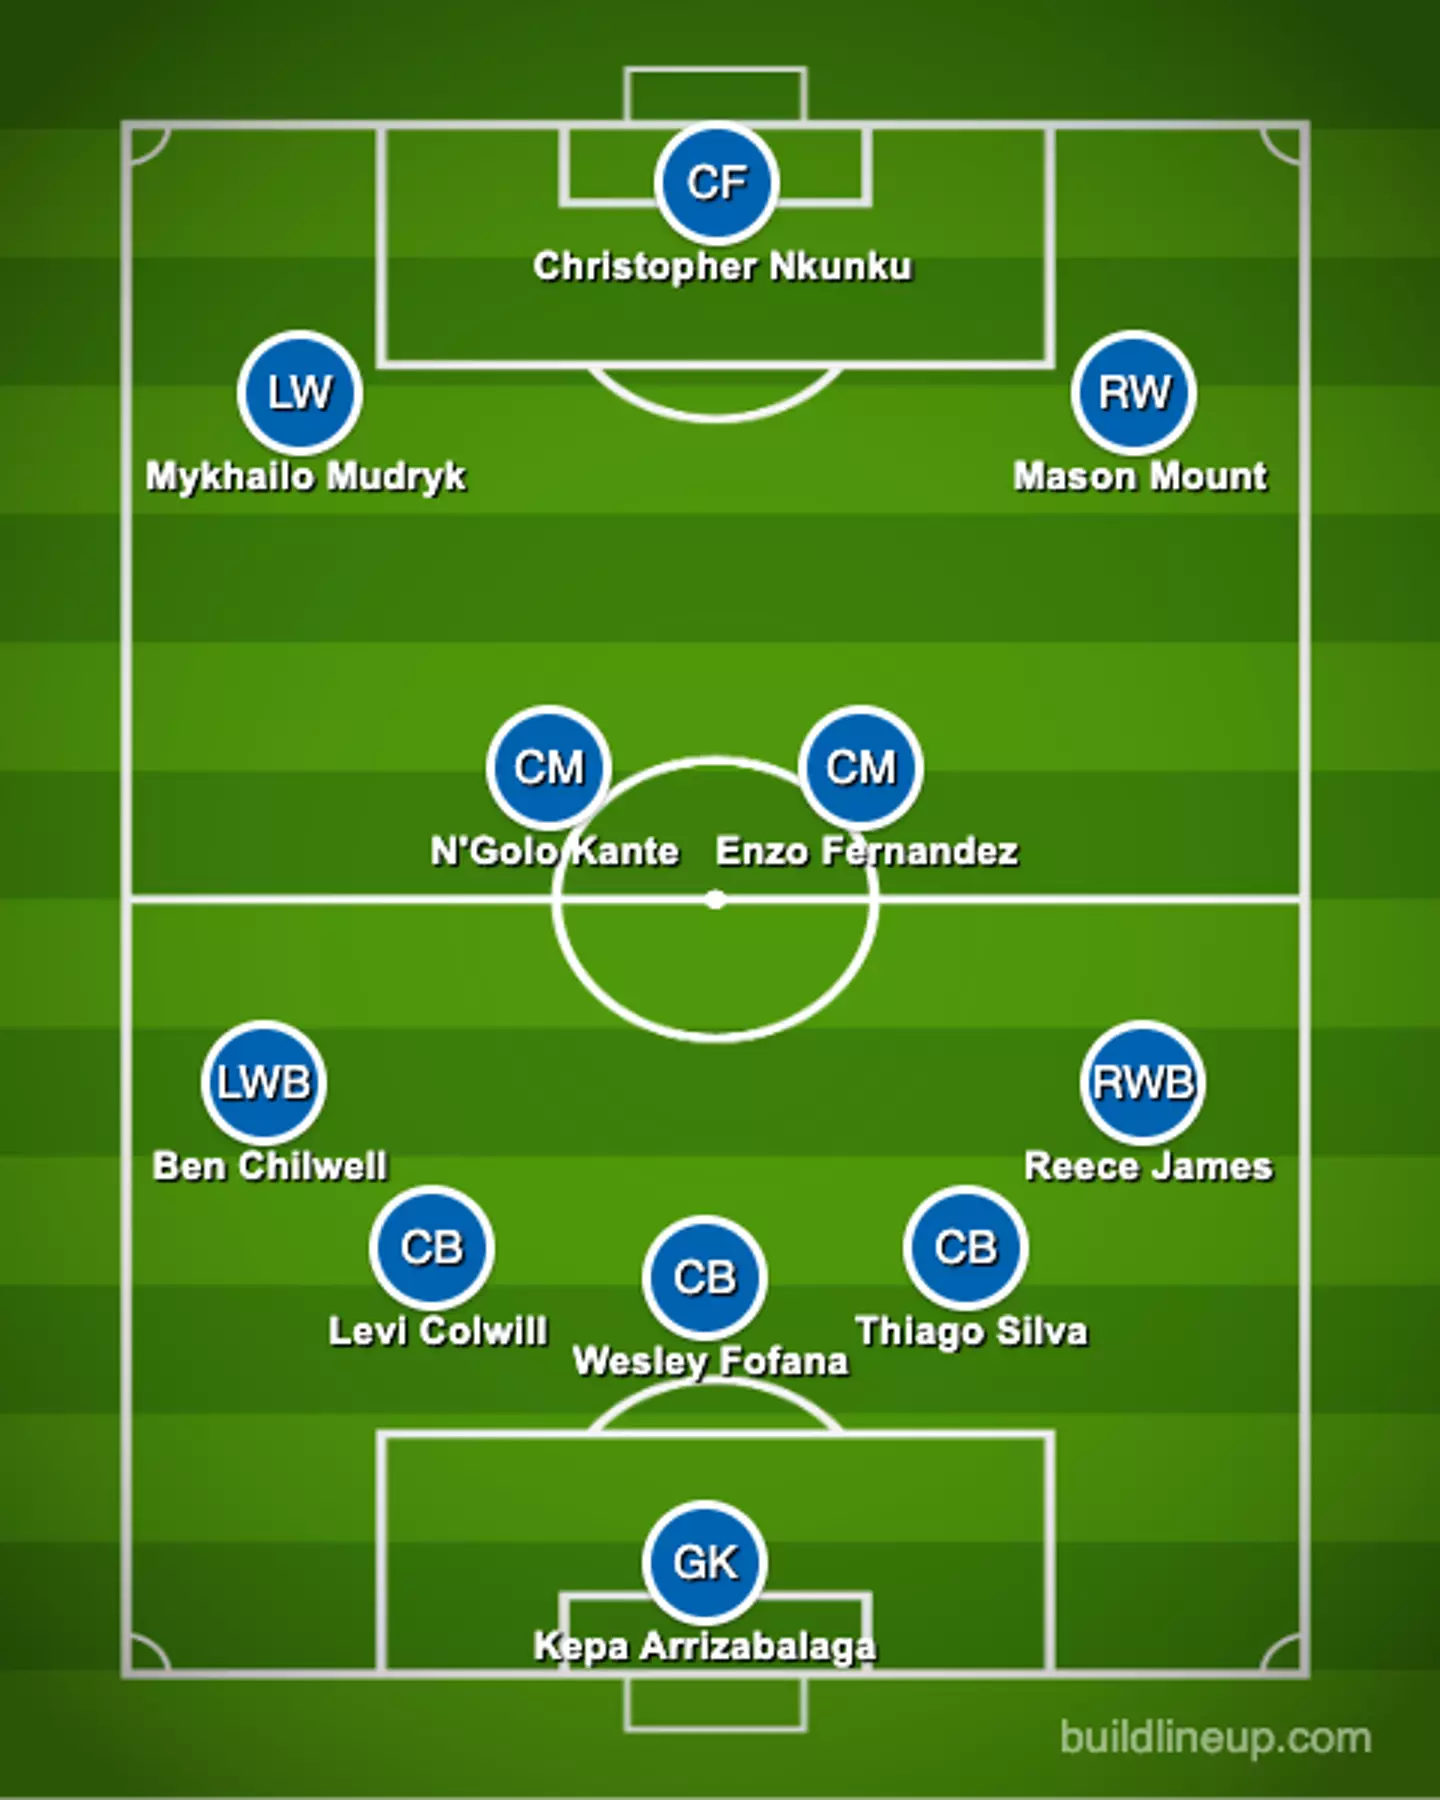 Chelsea's alternative XI. Image: buildlineup